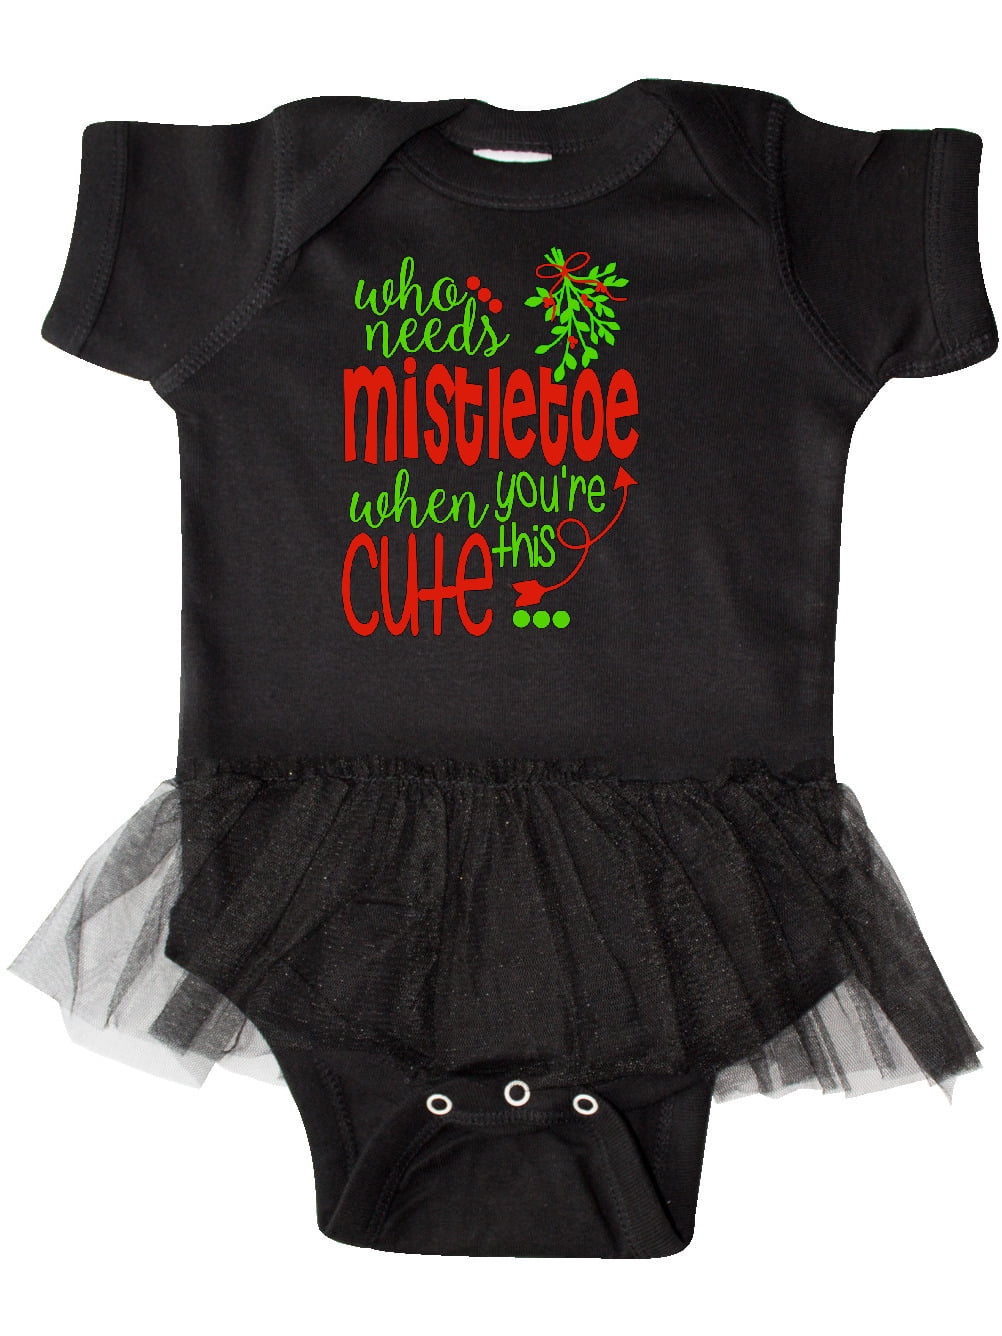 1st CHRISTMAS gift mistletoe cute Personalised baby bodysuit vest babygrow